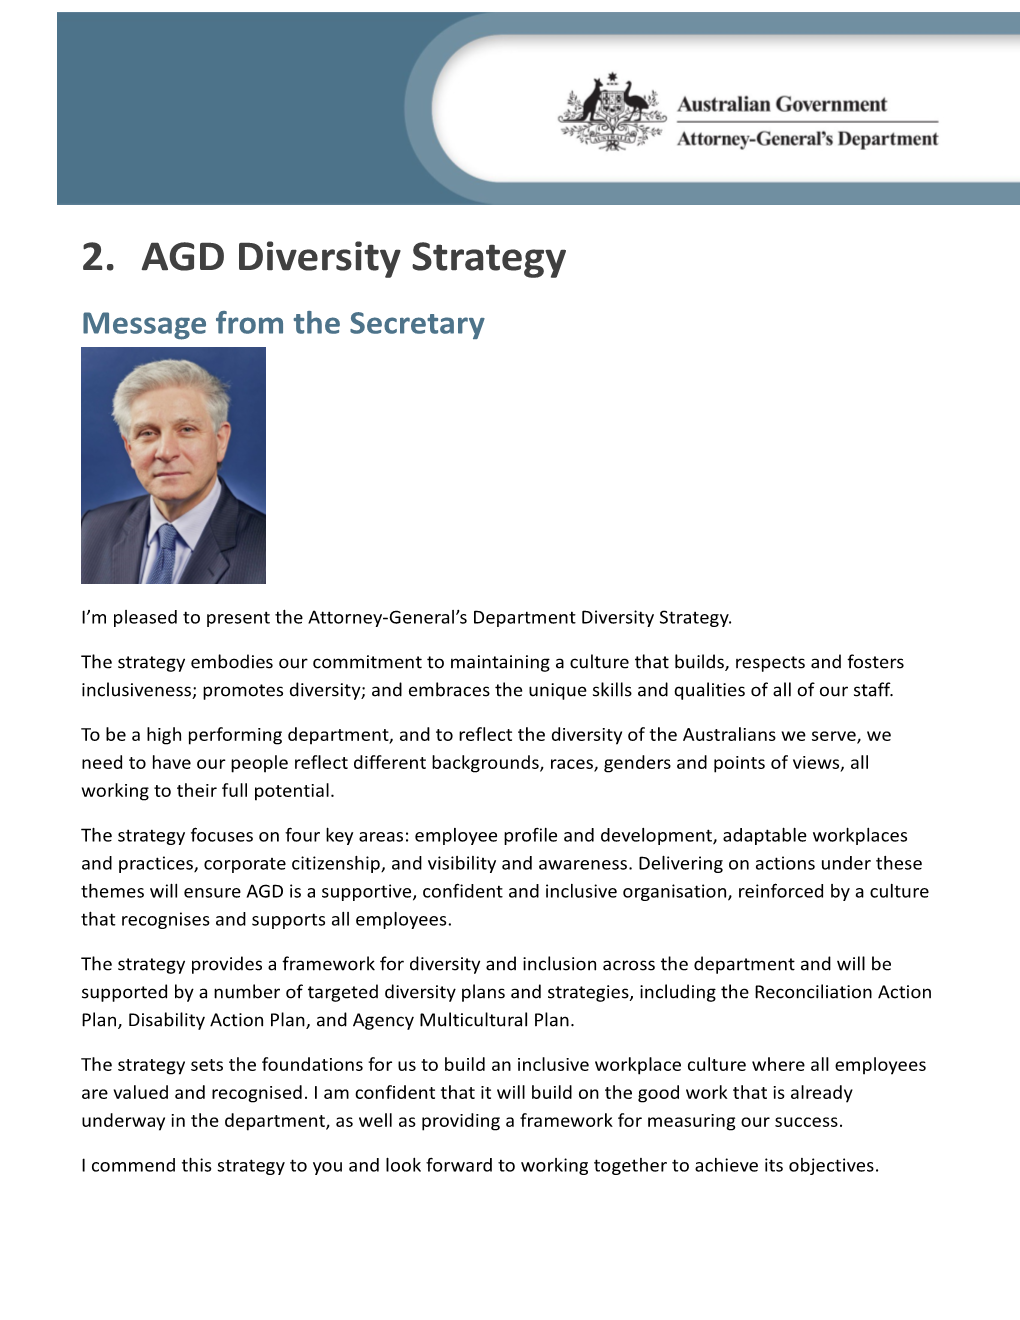 AGD Diversity Strategy Plan